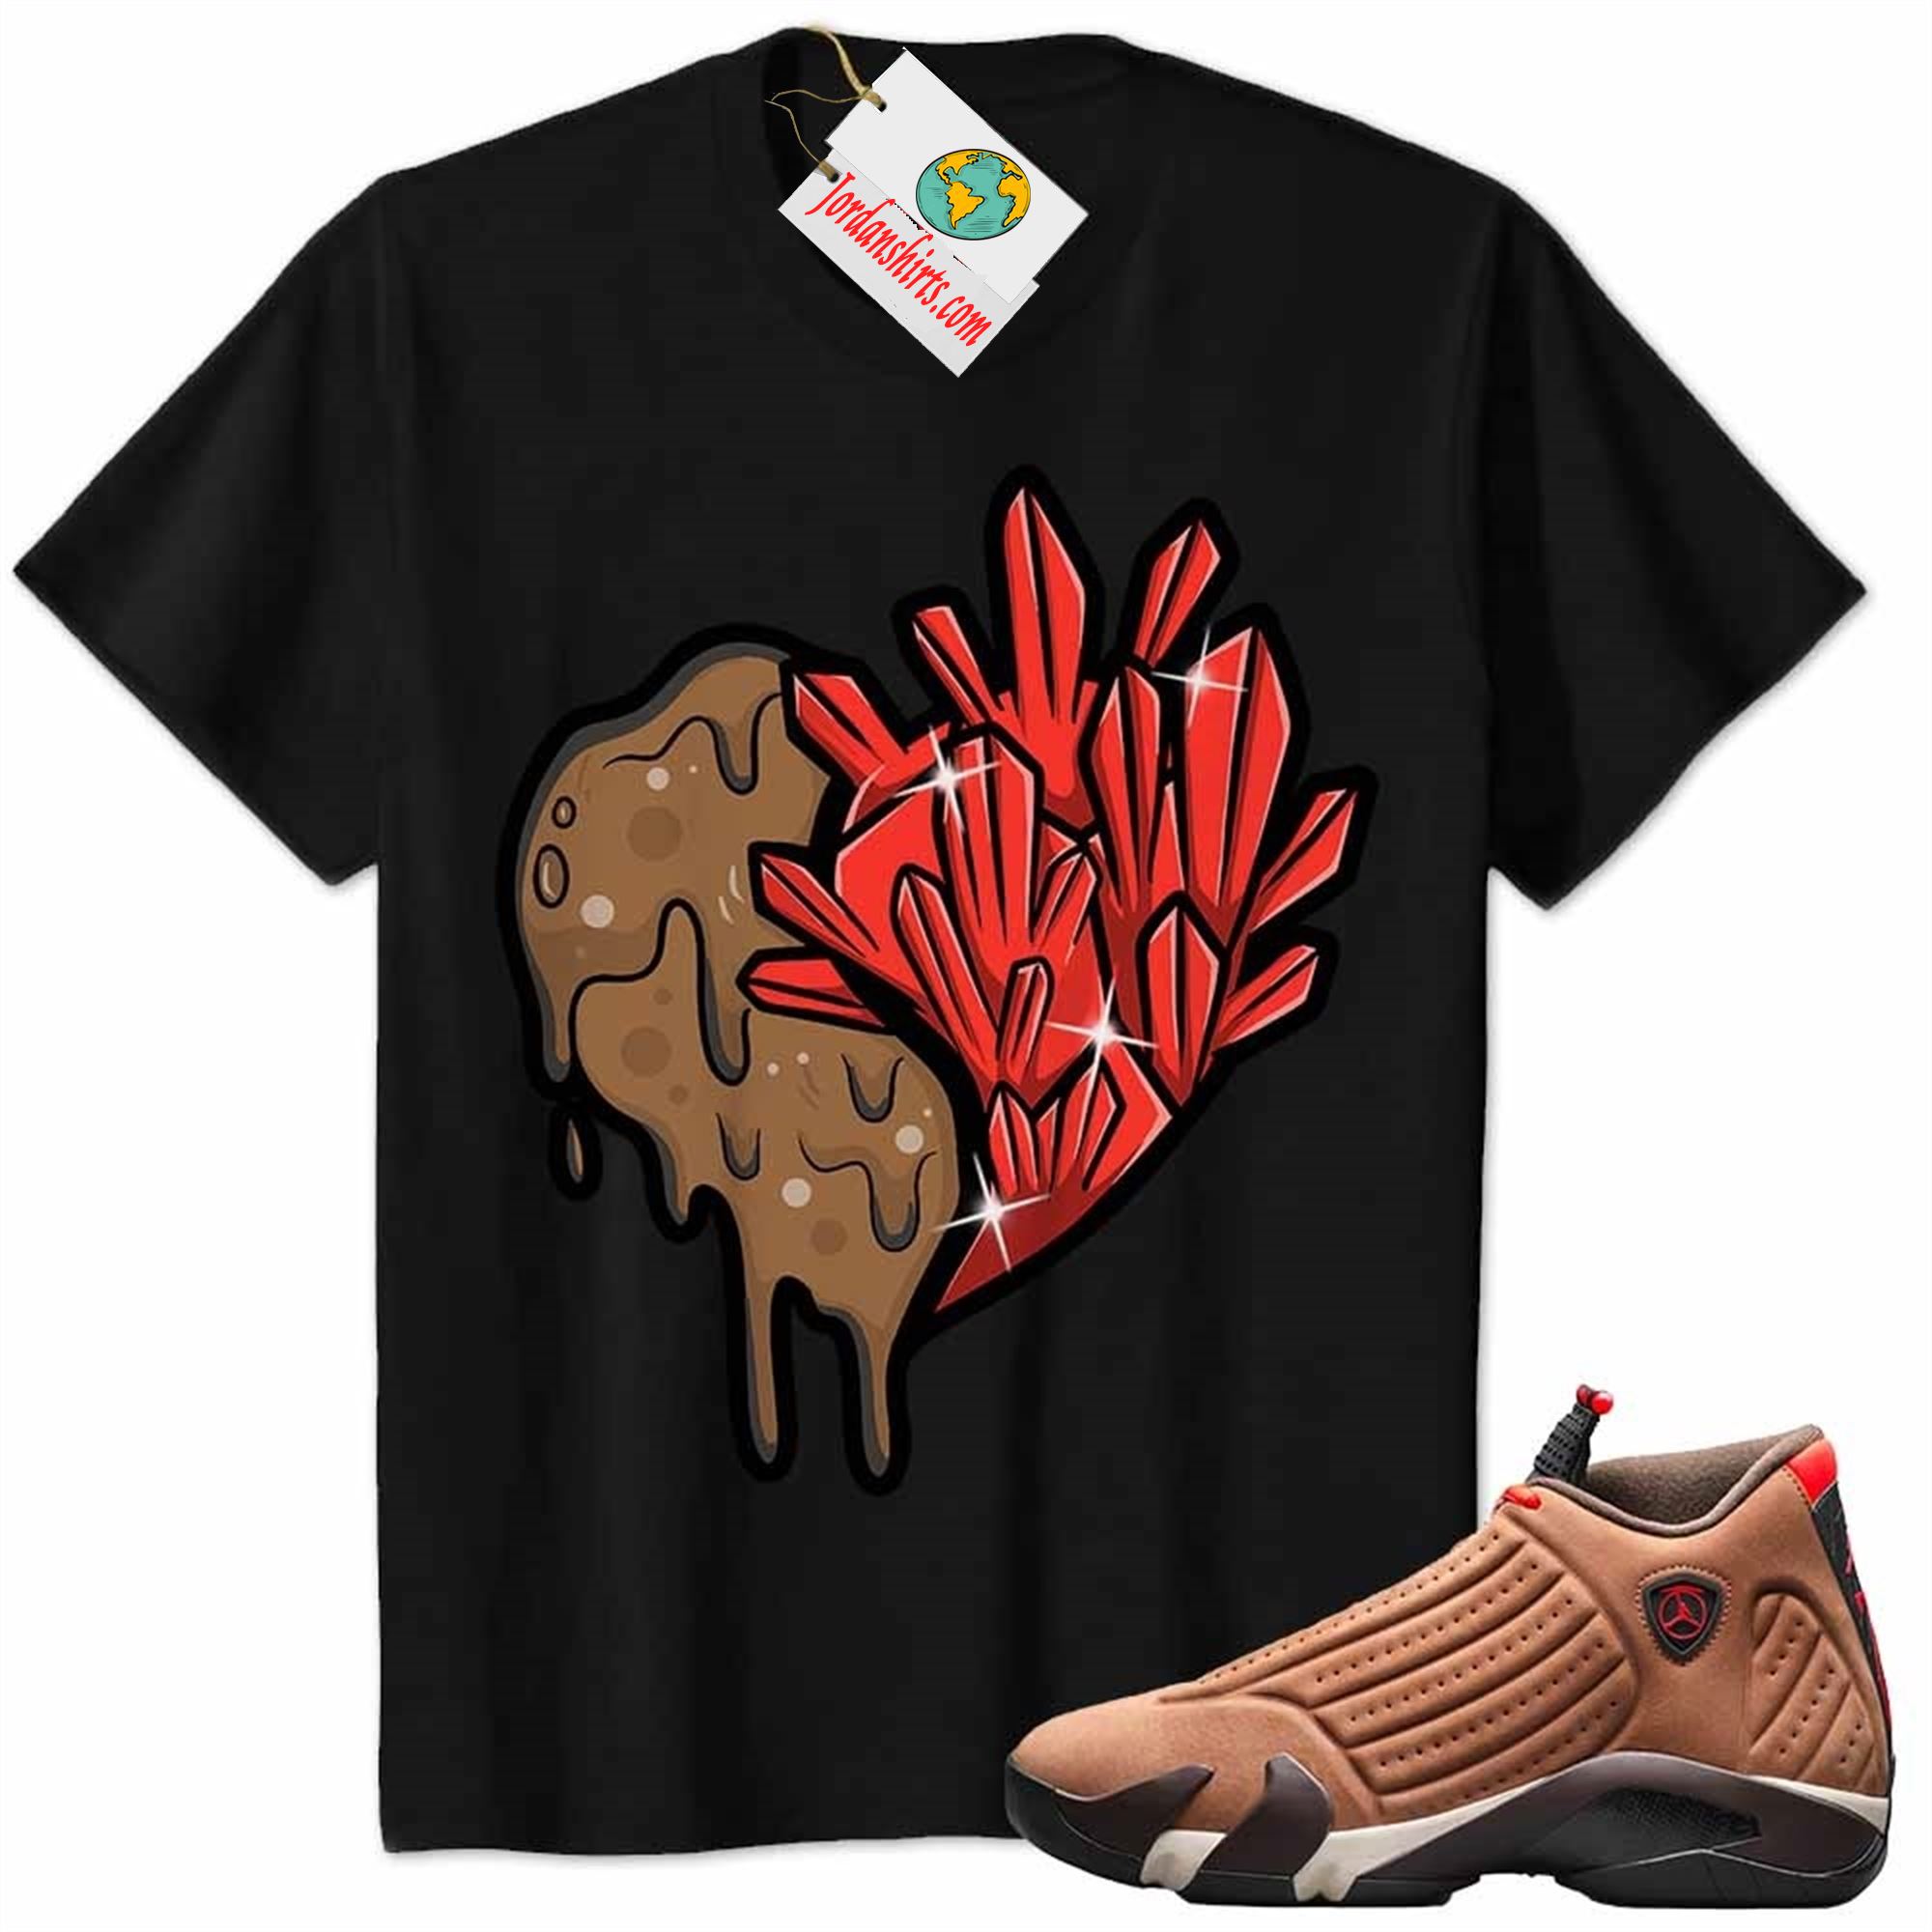 Jordan 14 Shirt, Crystal And Melt Heart Black Air Jordan 14 Winterized 14s Full Size Up To 5xl